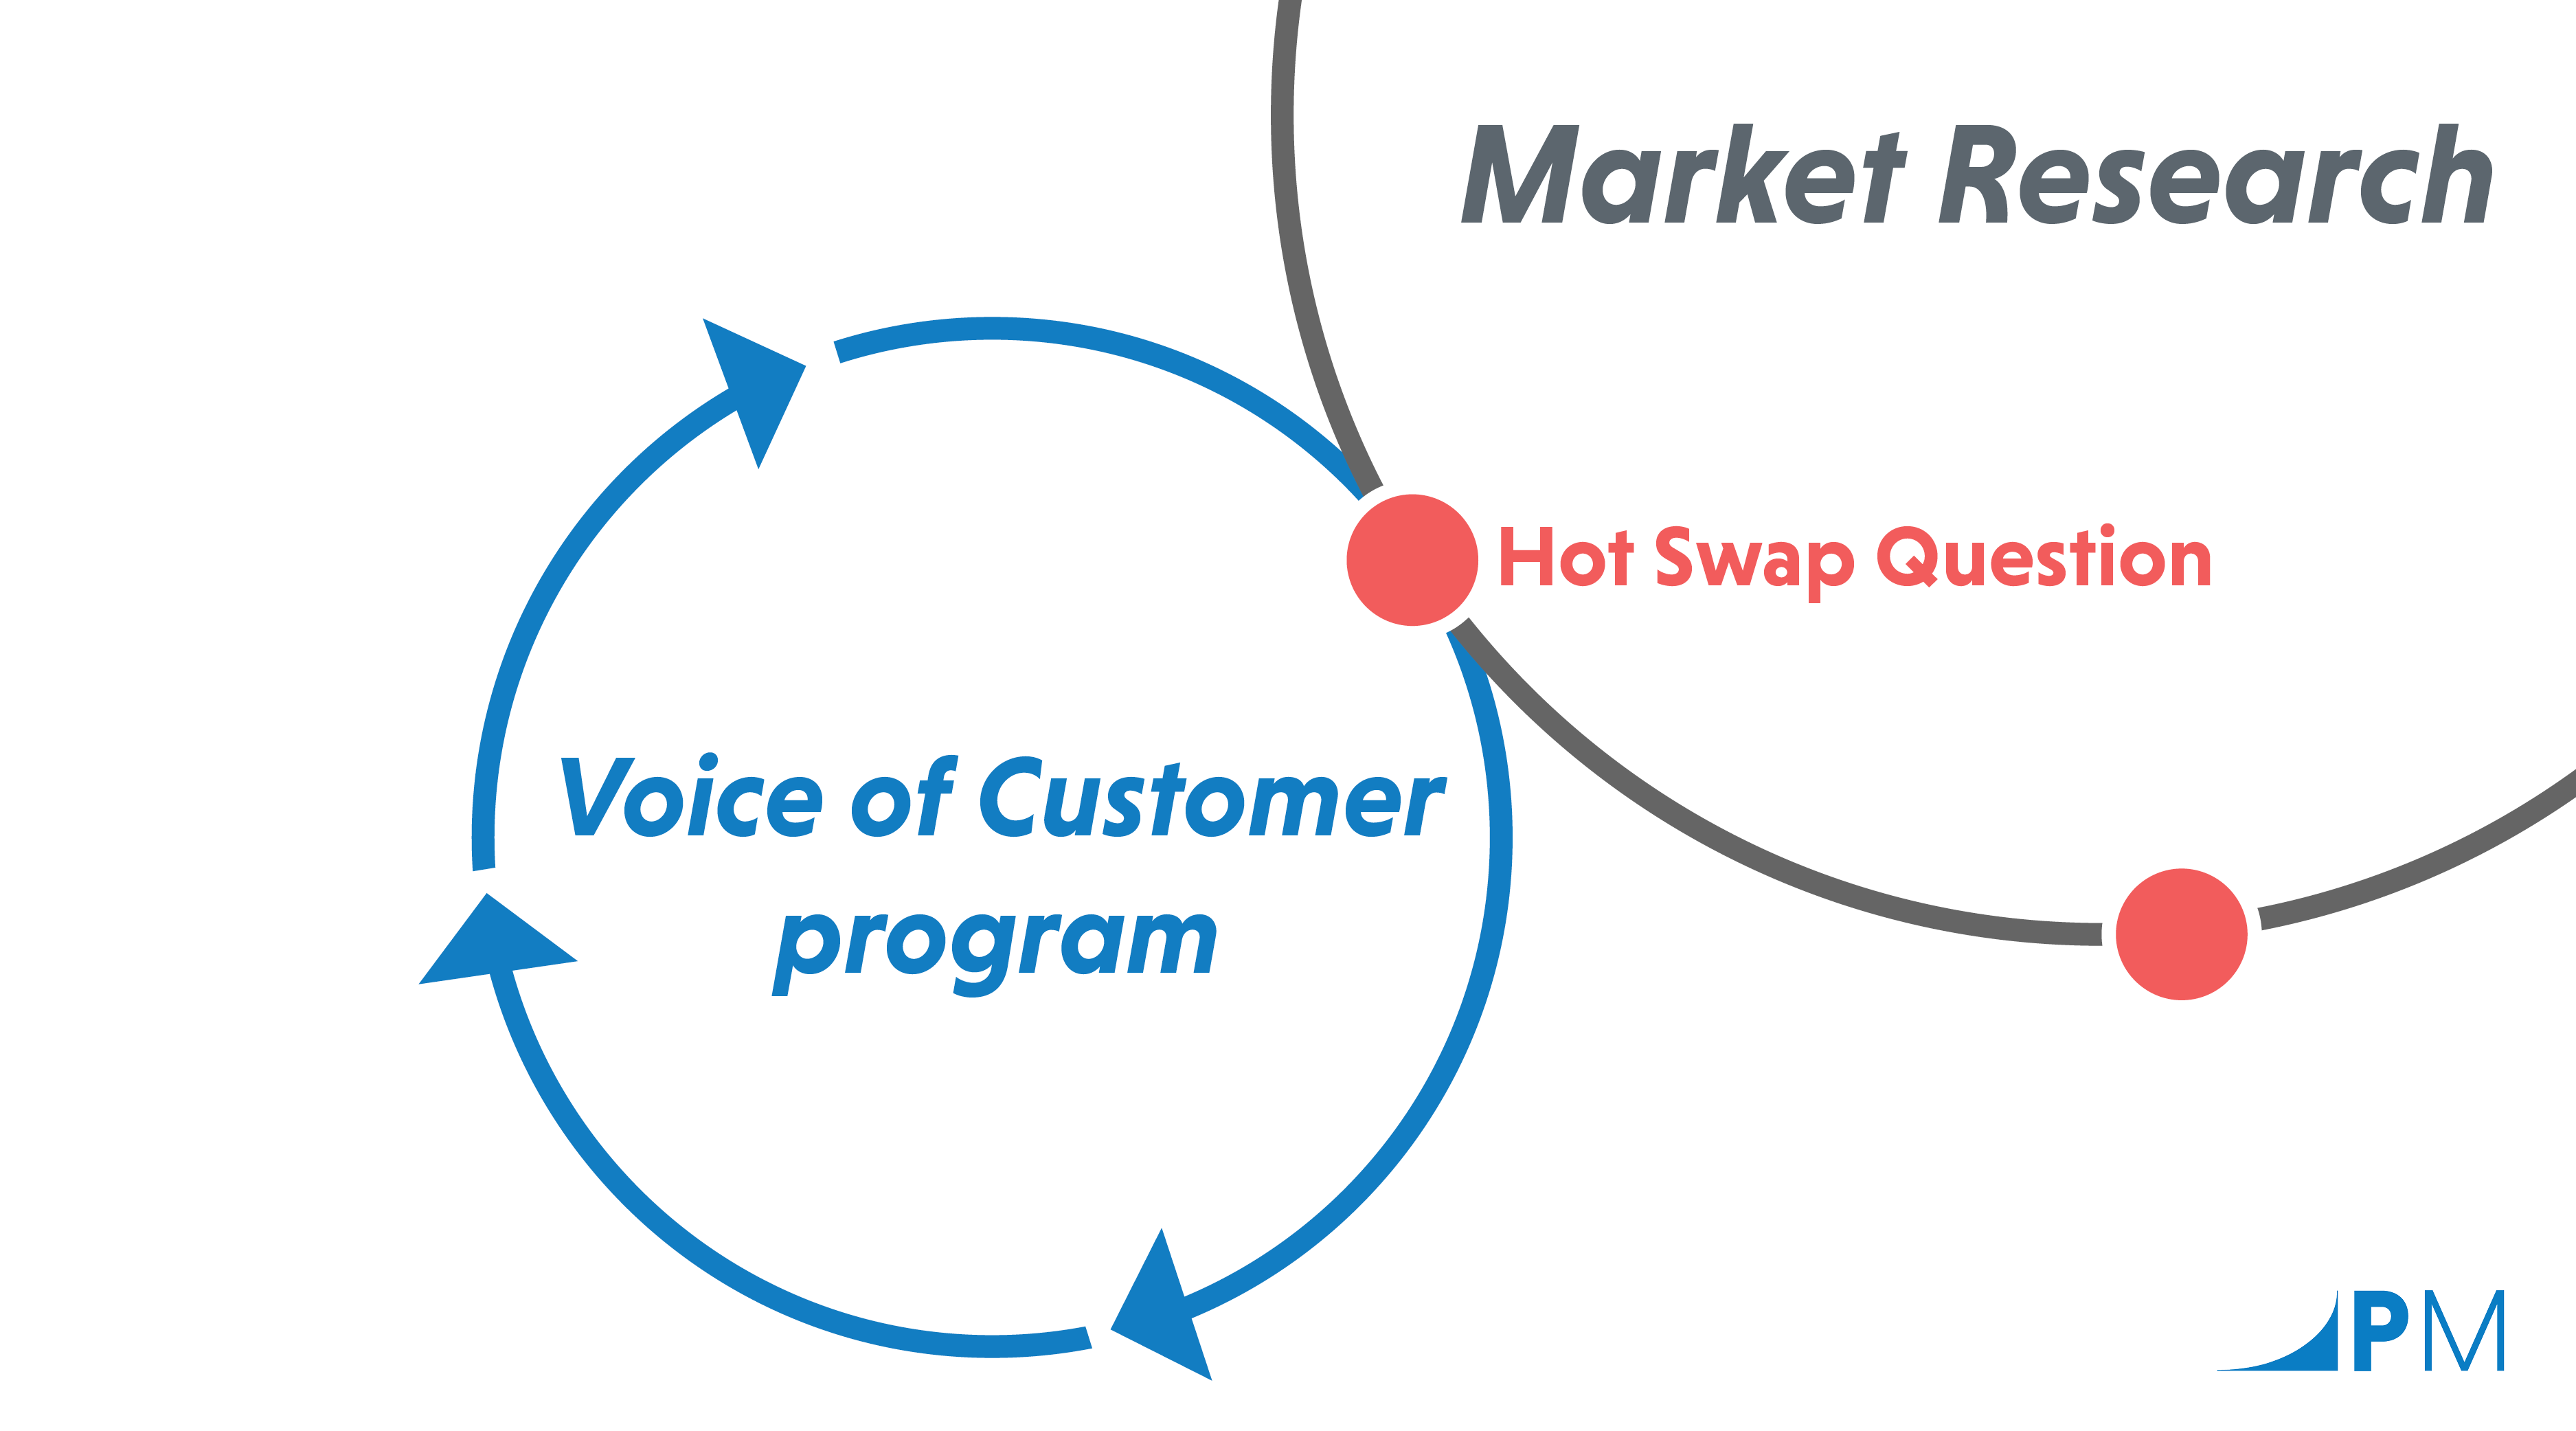 The PeopleMetrics Hot Swap model